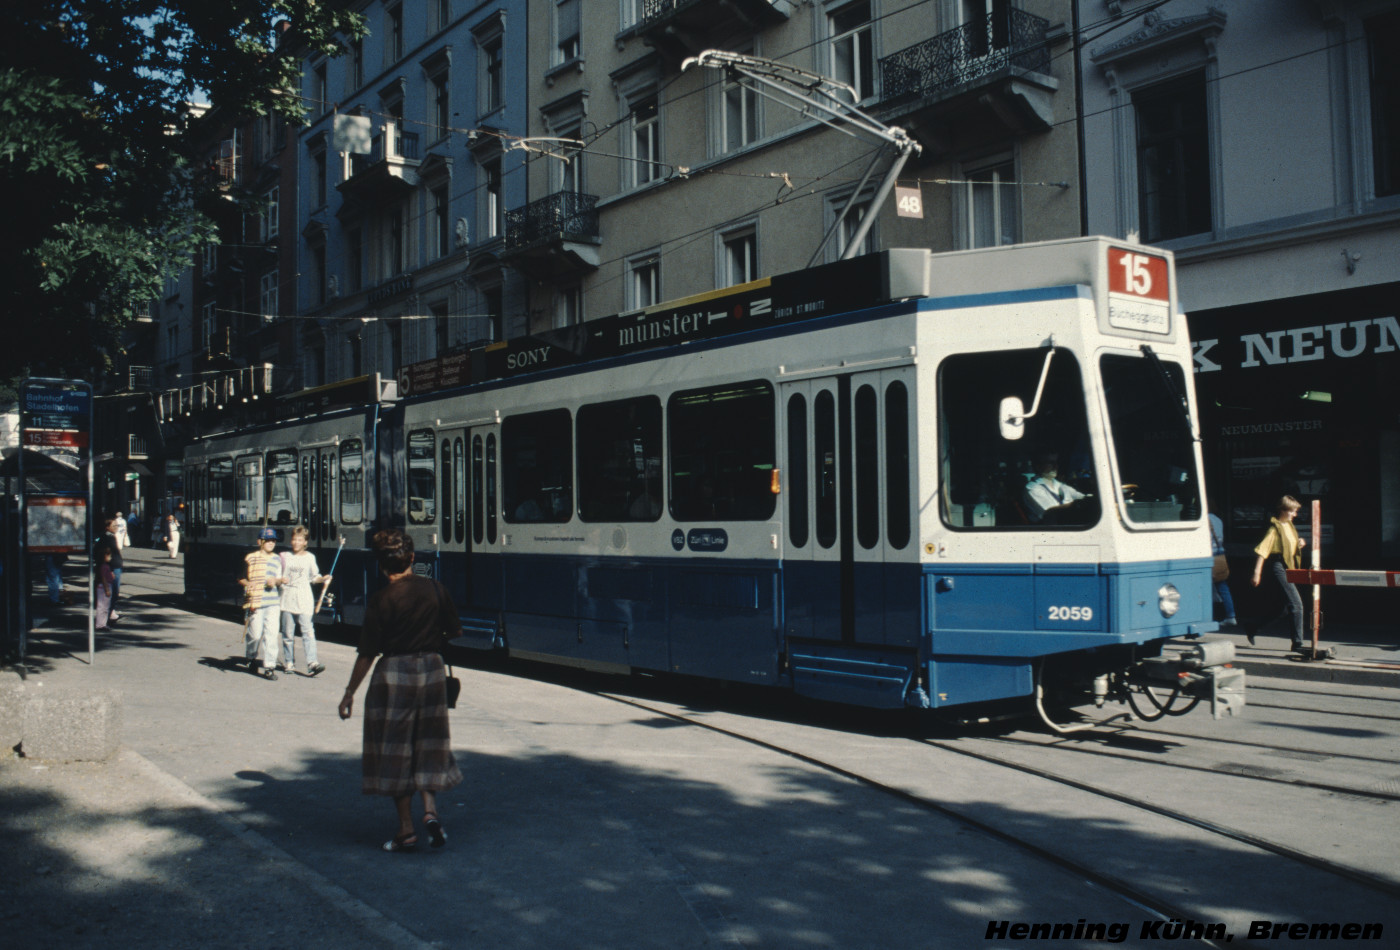 Schindler-Be4/6 (Tram 2000) #2059